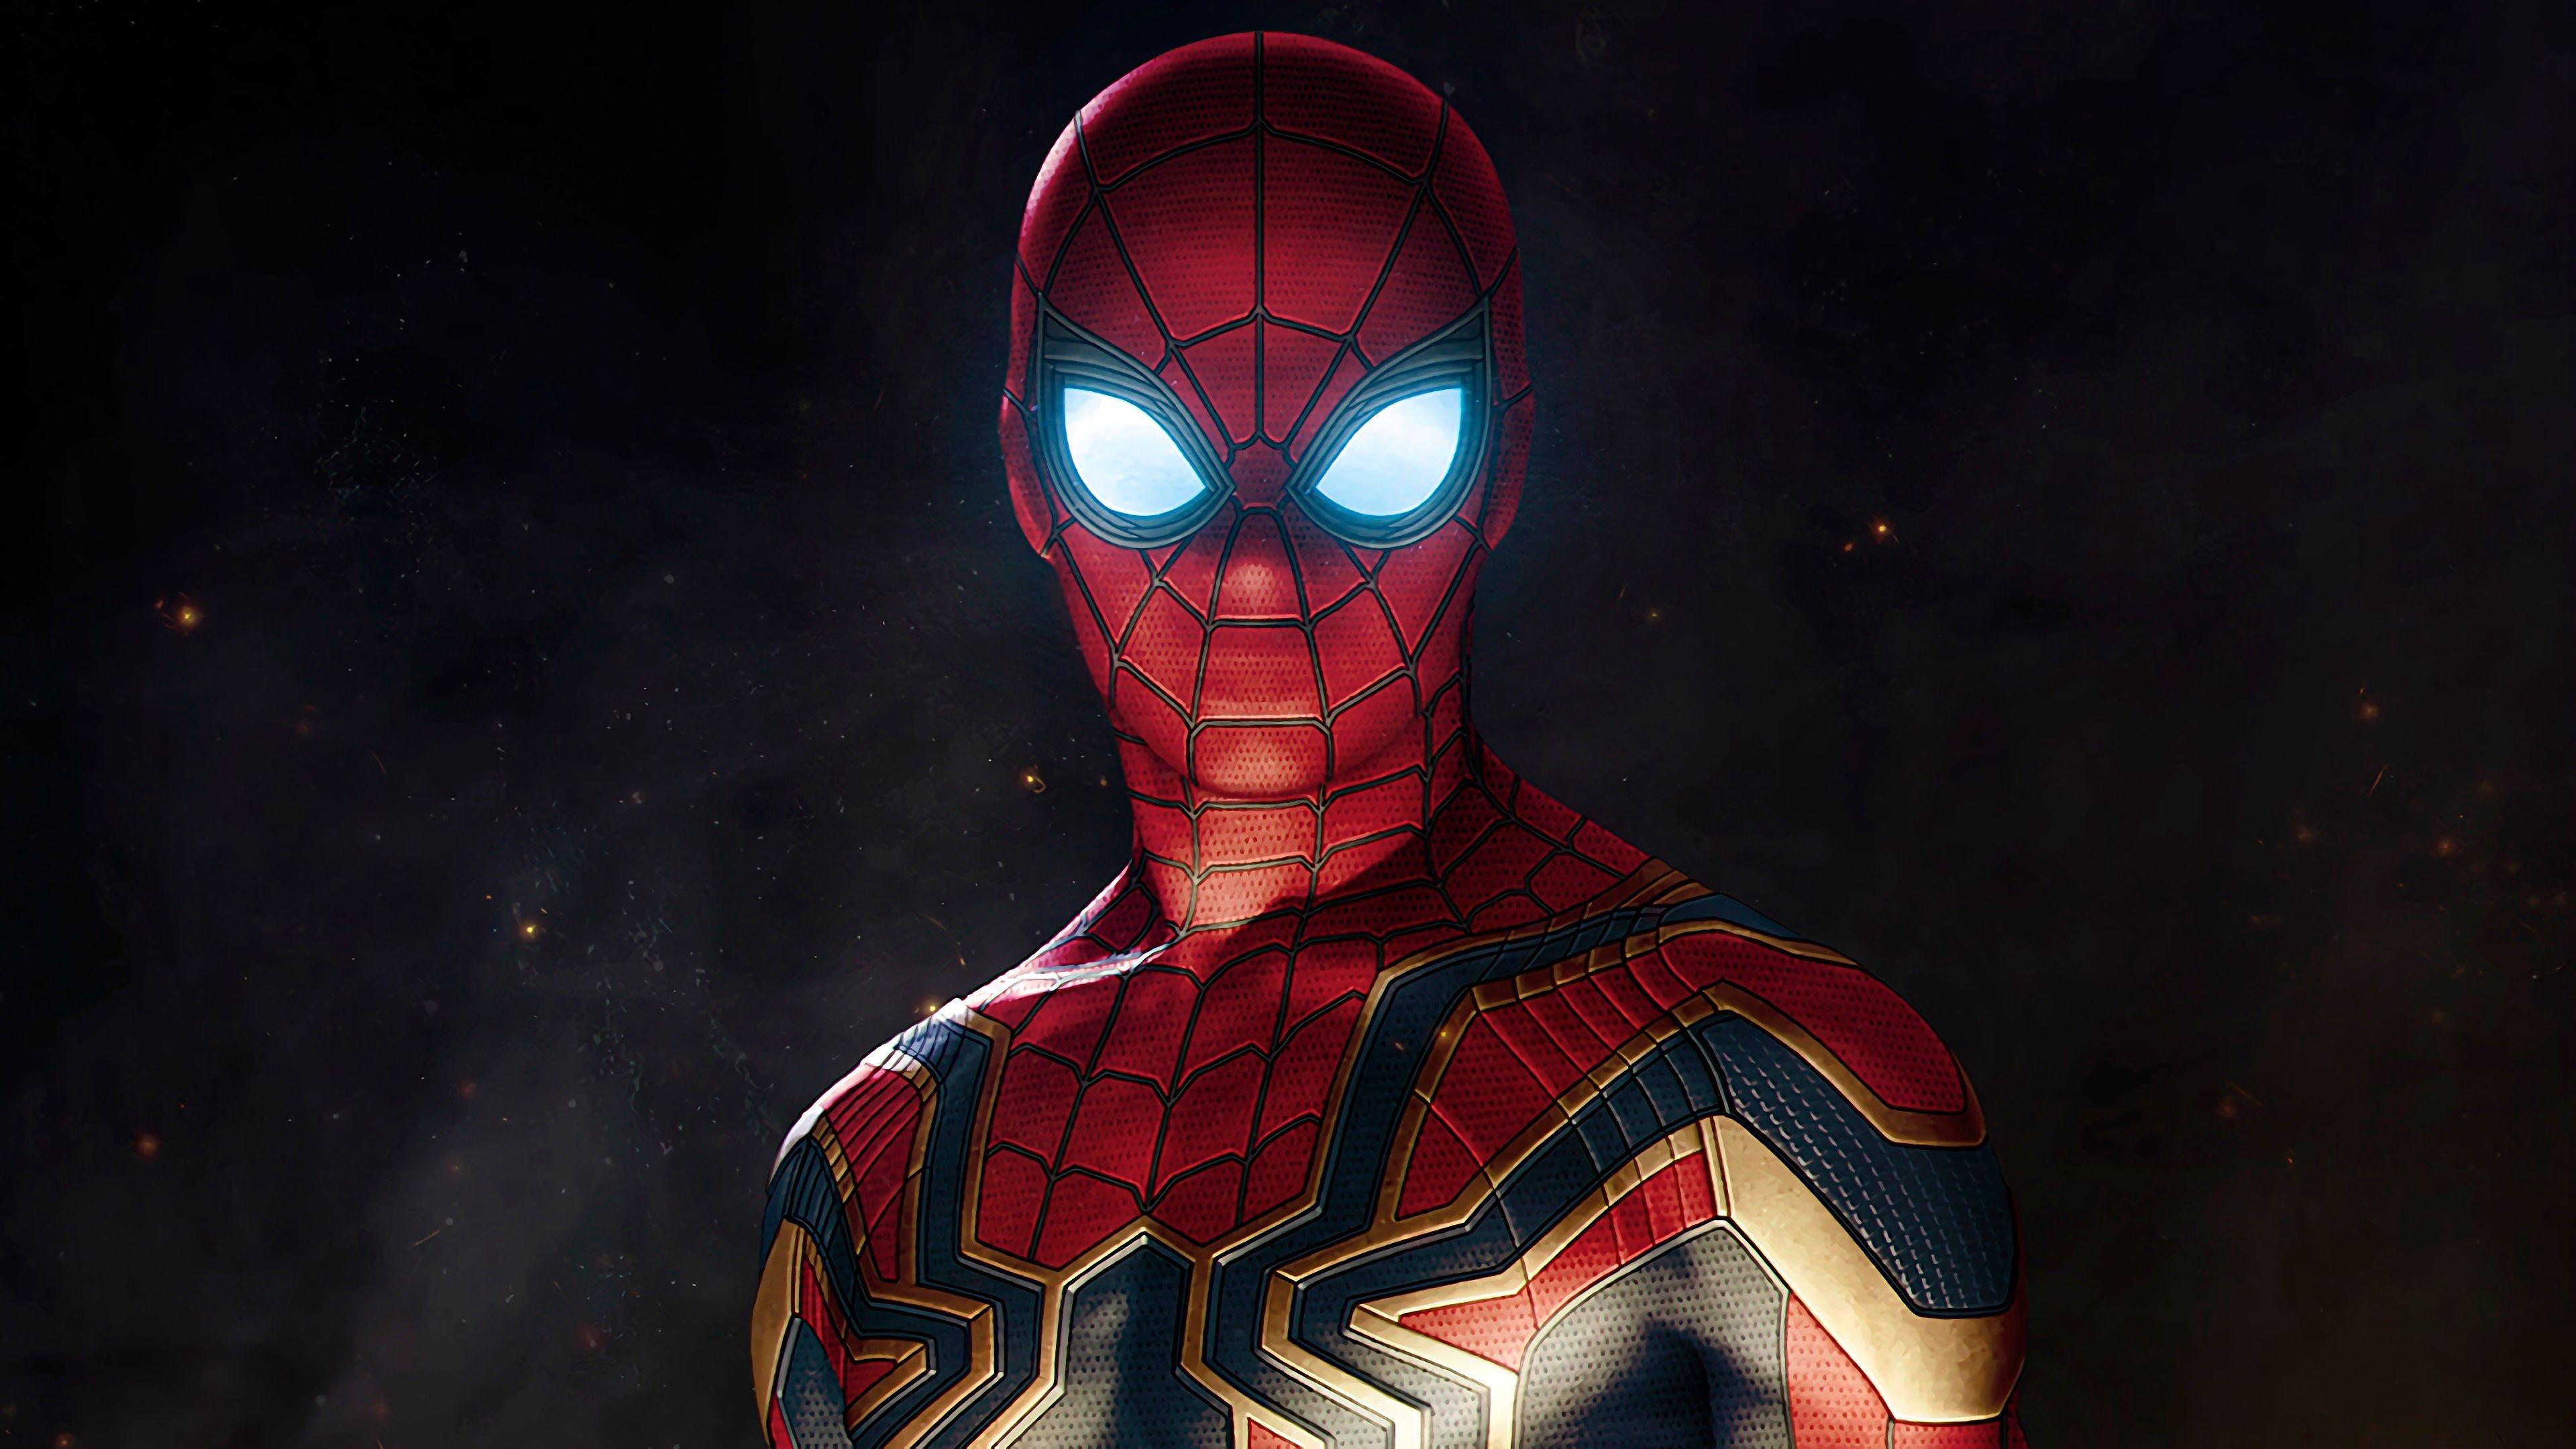 Spider Man in Avengers Infinity War 4K Wallpaper